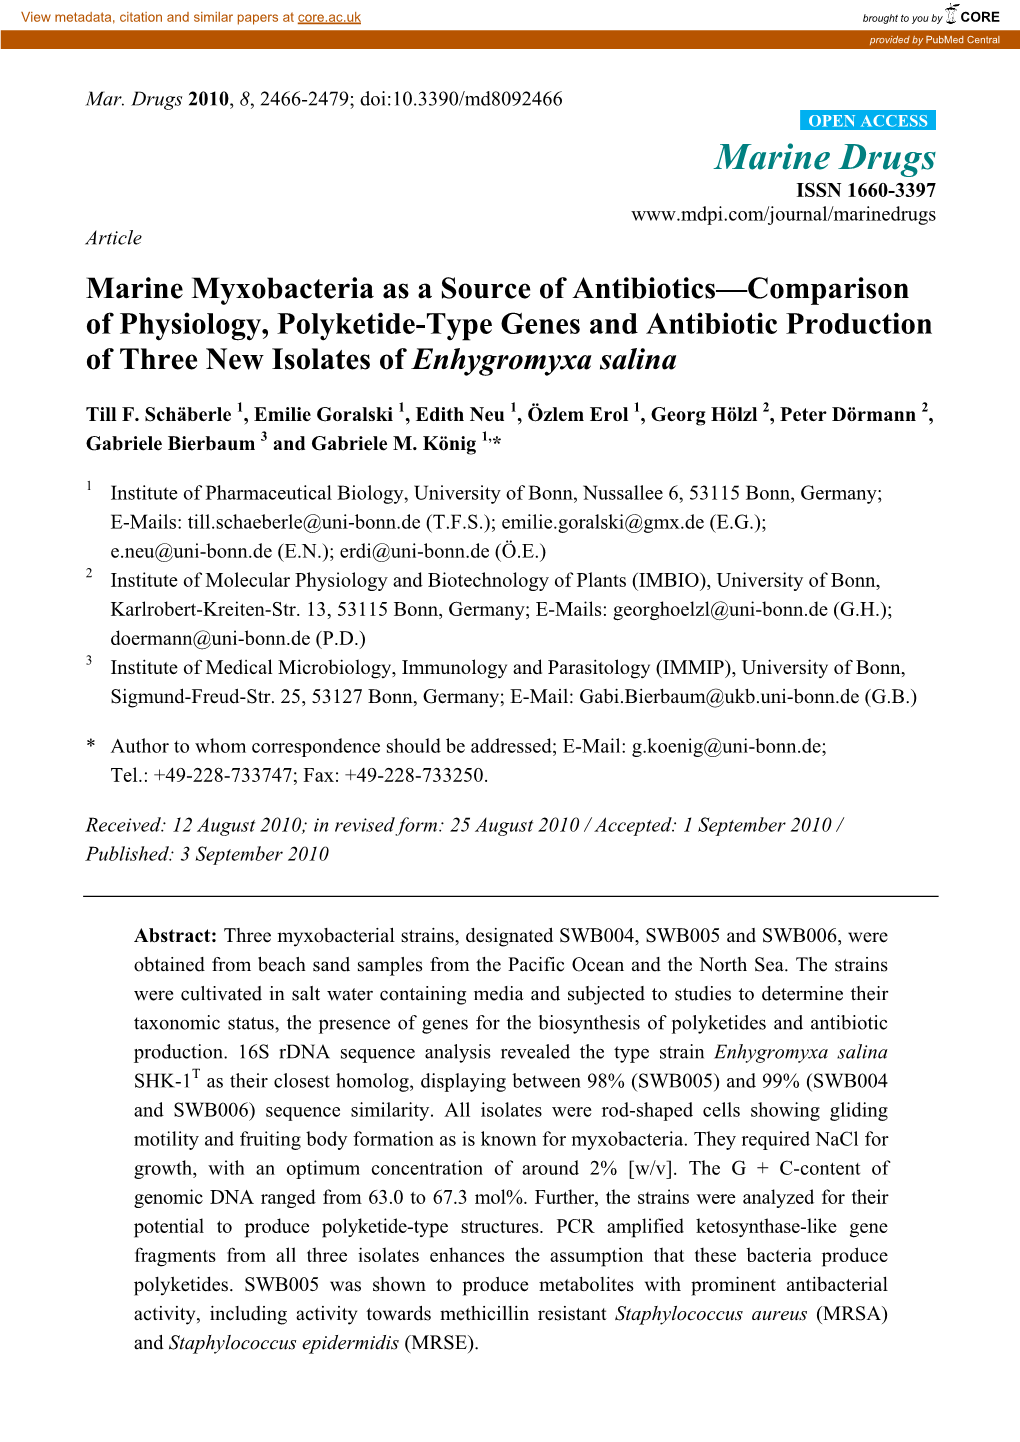 Marine Myxobacteria As a Source of Antibiotics—Comparison of Physiology, Polyketide-Type Genes and Antibiotic Production of Three New Isolates of Enhygromyxa Salina